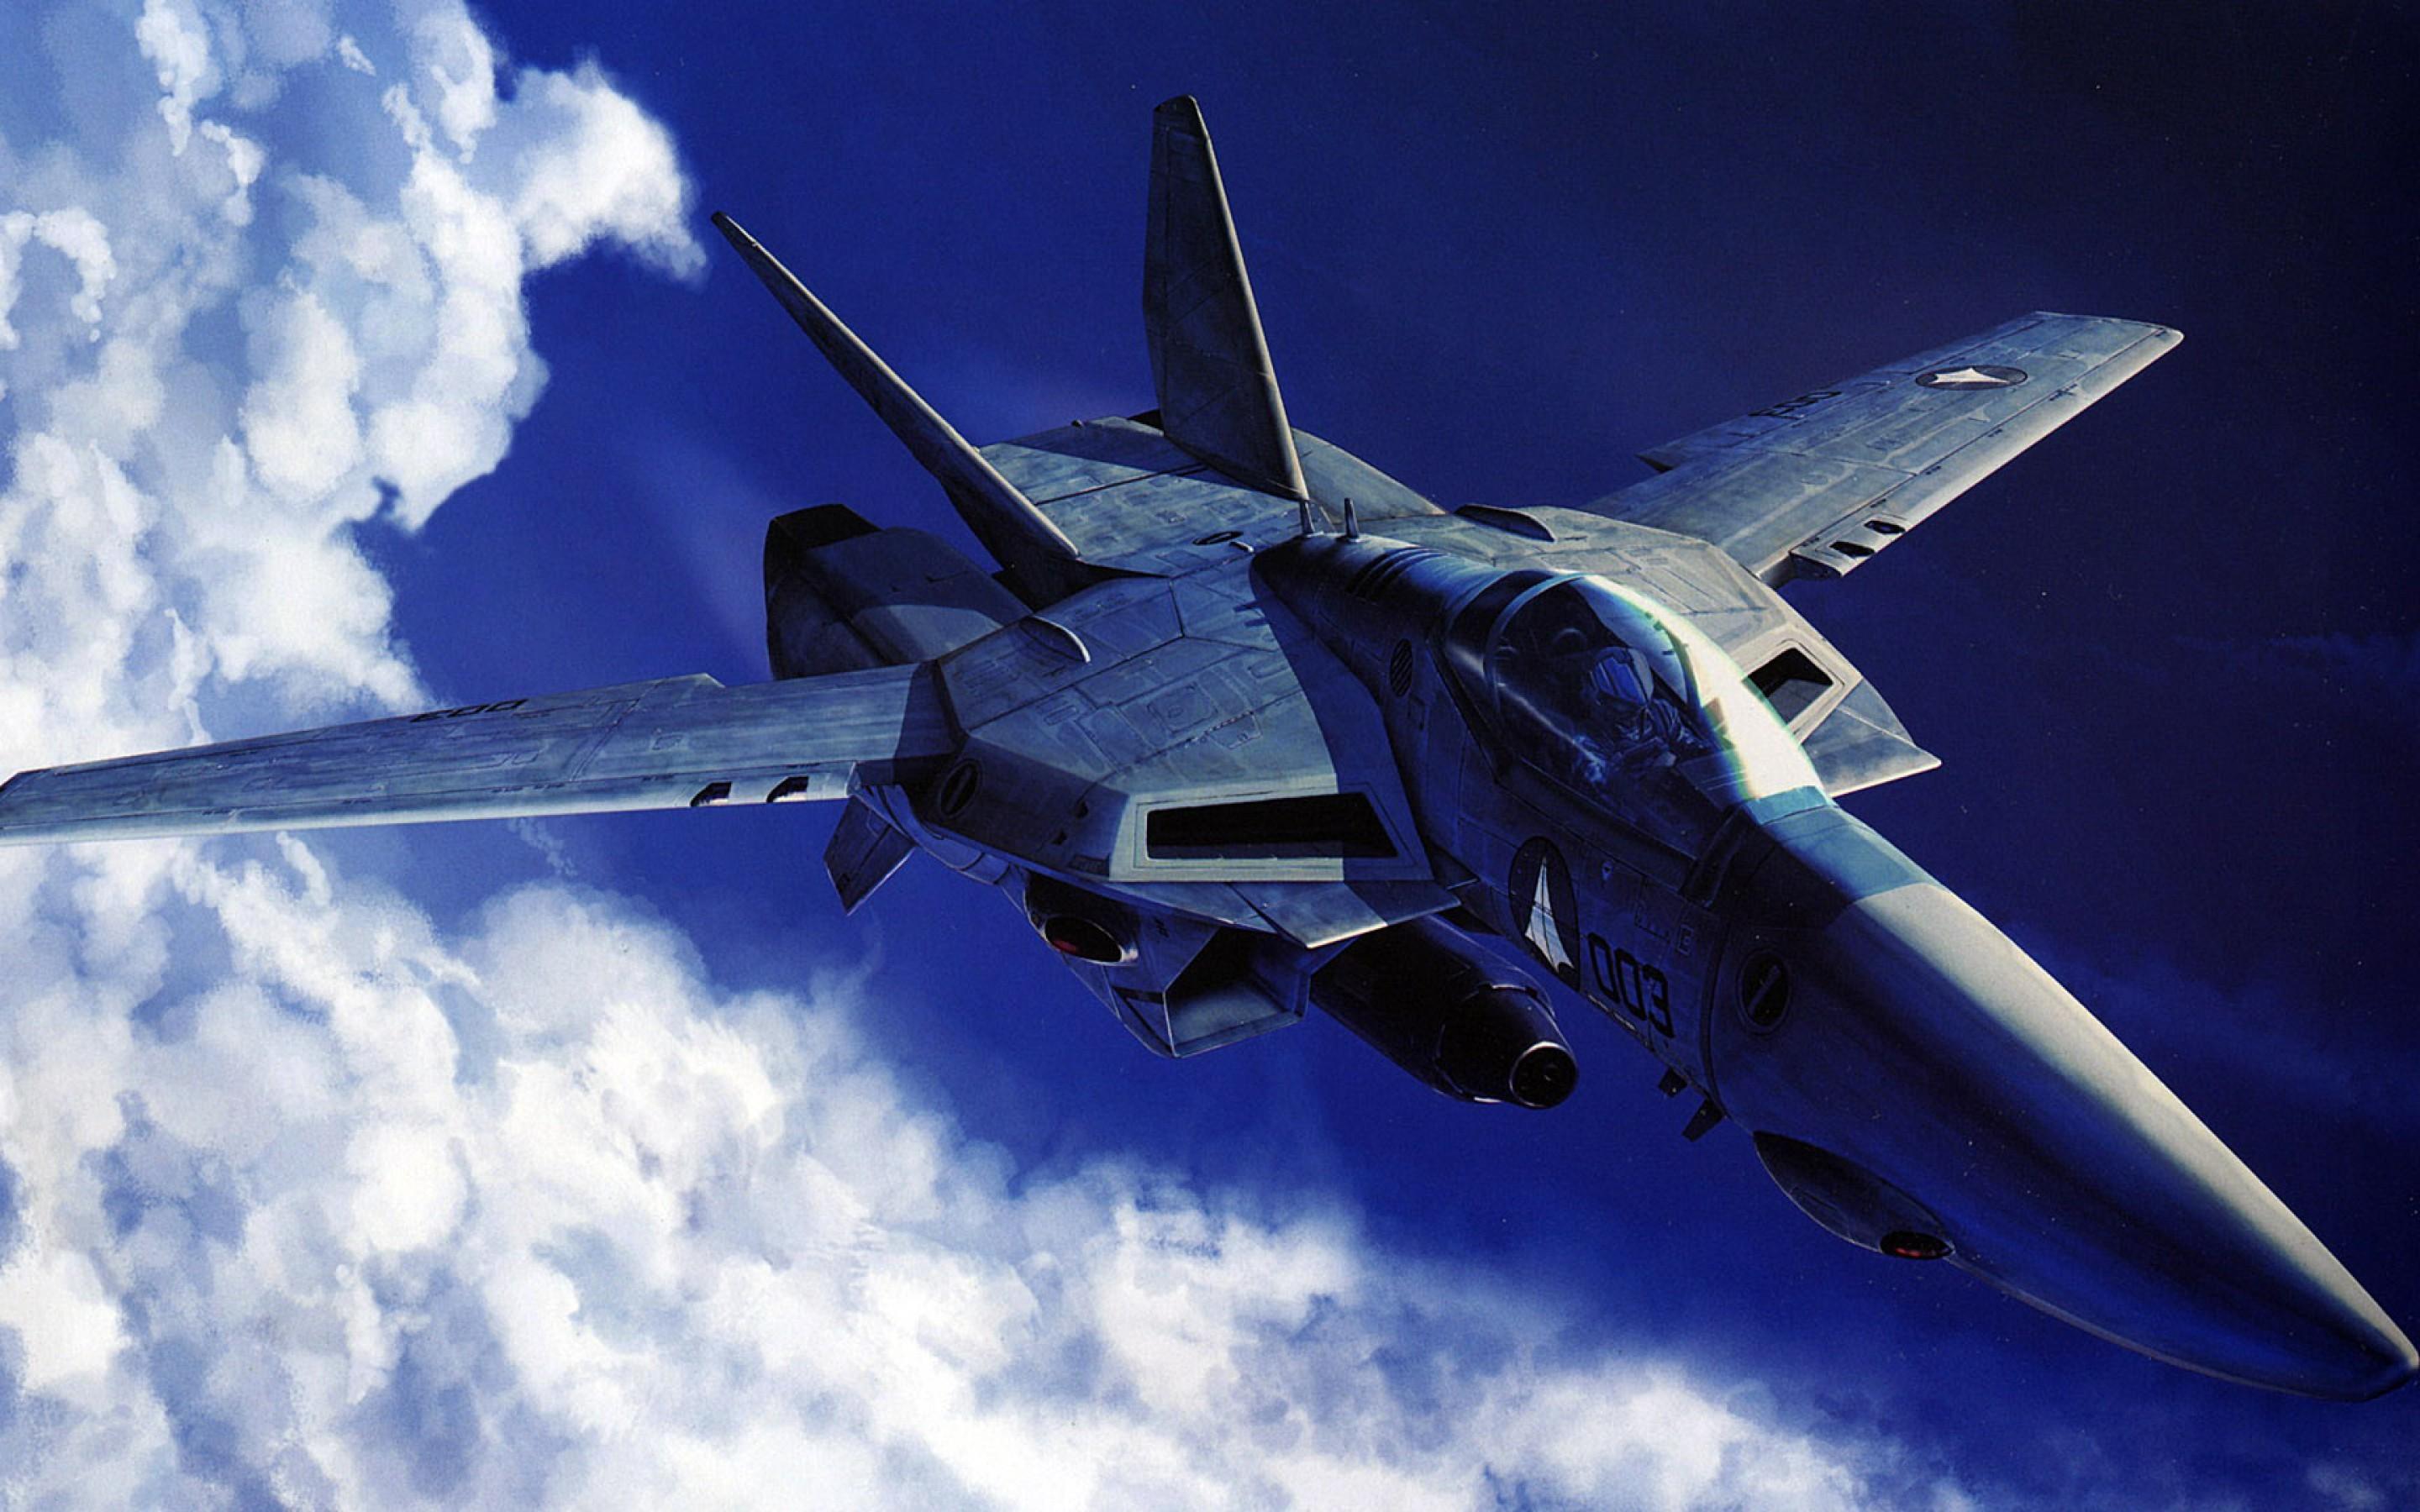 HD wallpaper, Digital Art, Futuristic, Vehicle, Macross, Military Aircraft, Jet Fighter, Aircraft